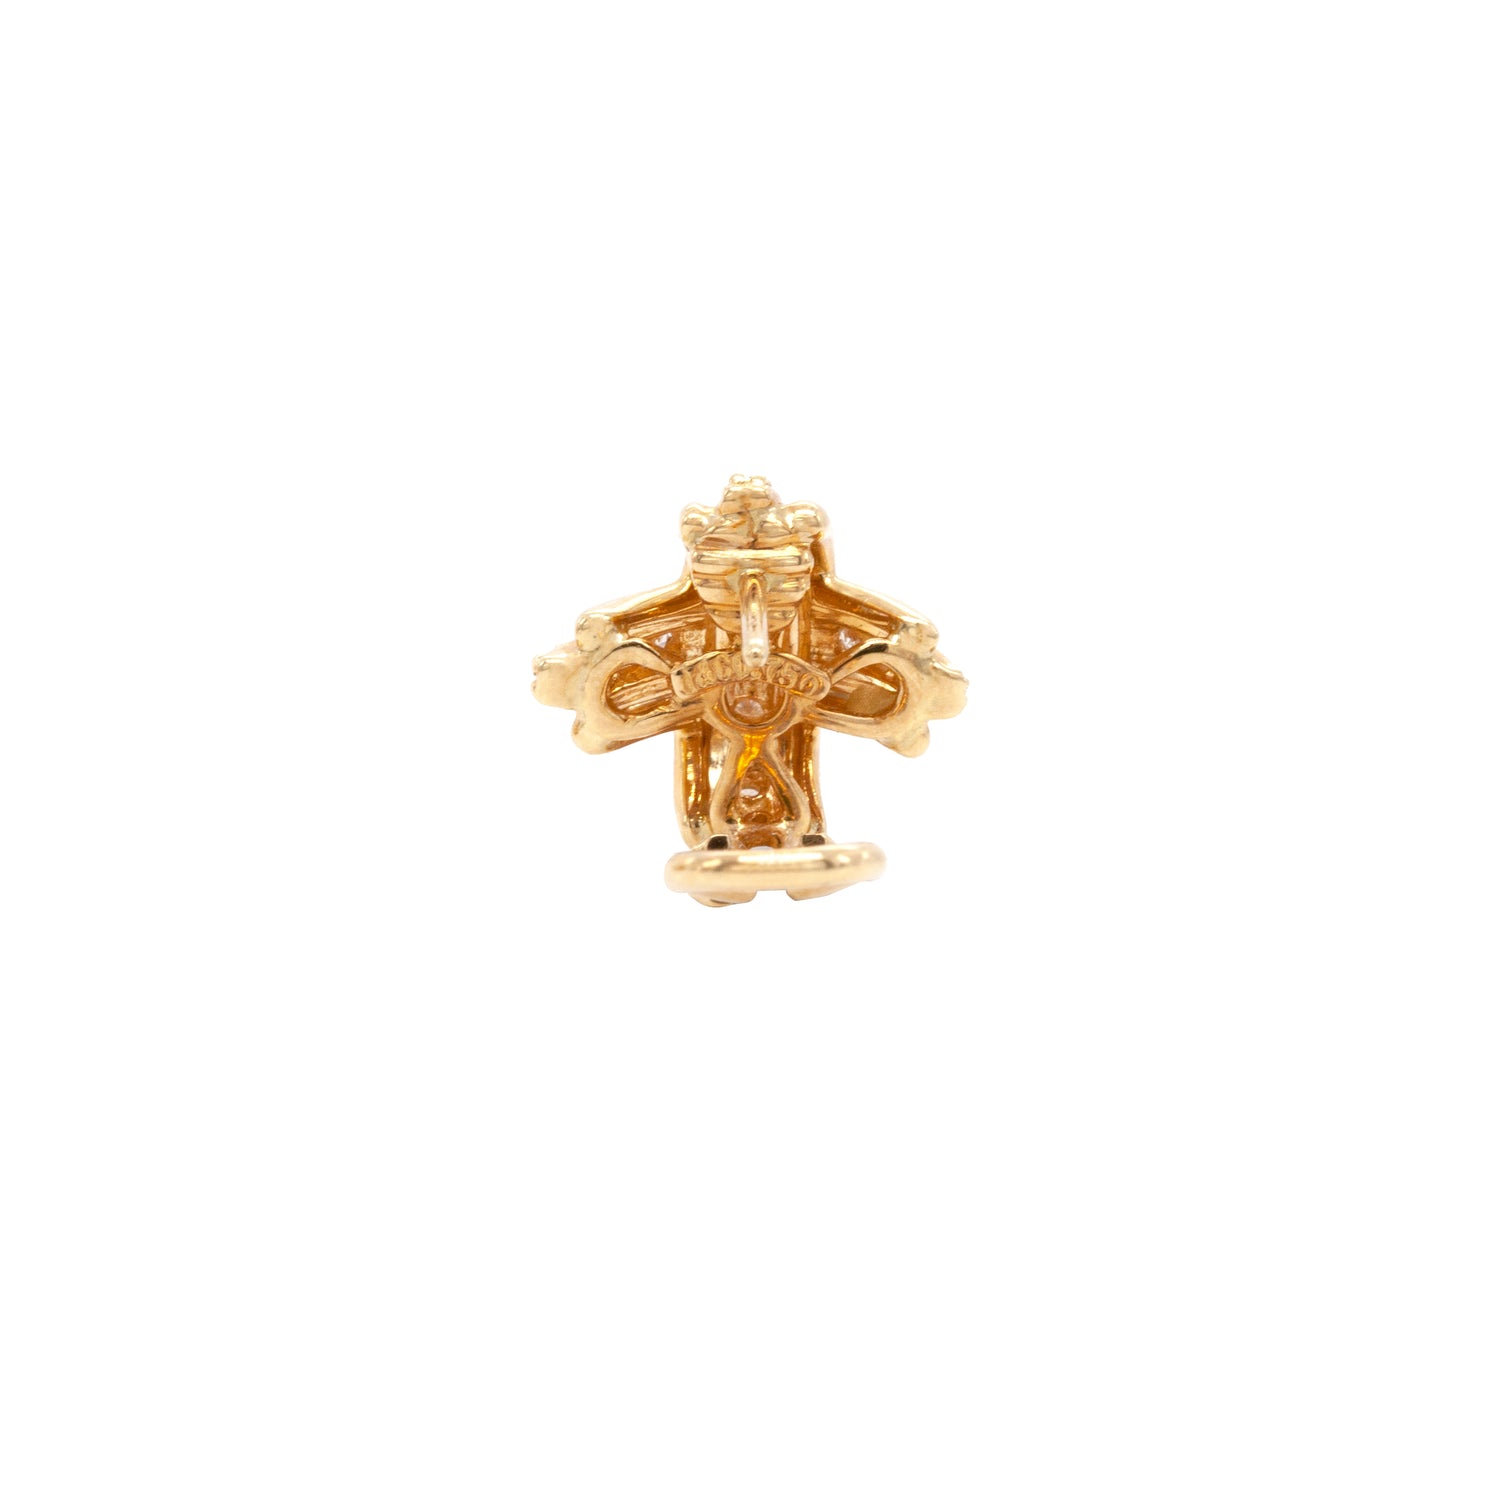 Tiffany & Co. 18ct Yellow Gold and Diamond 'Kiss' Earrings